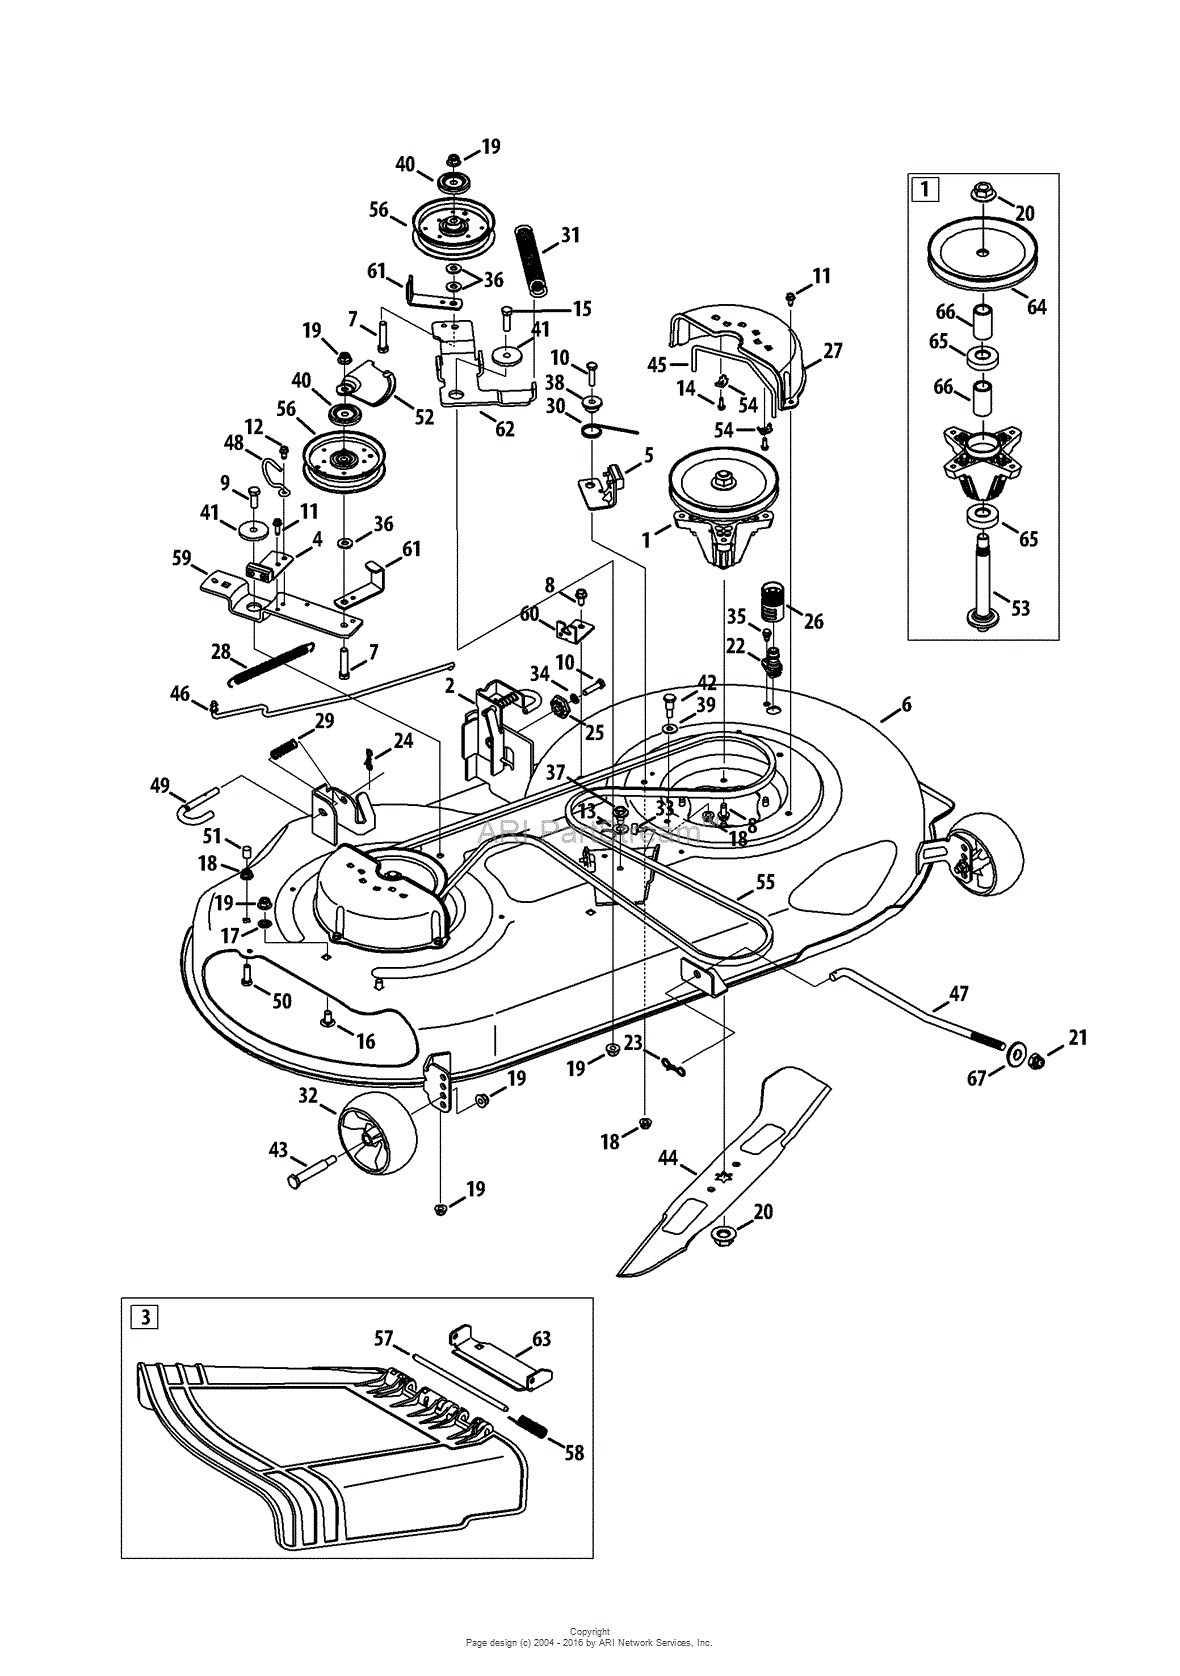 Craftsman Lawn Mower Parts Diagram Mtd 13bl78st099 247 Lt2000 2013 Parts Diagrams Of Craftsman Lawn Mower Parts Diagram